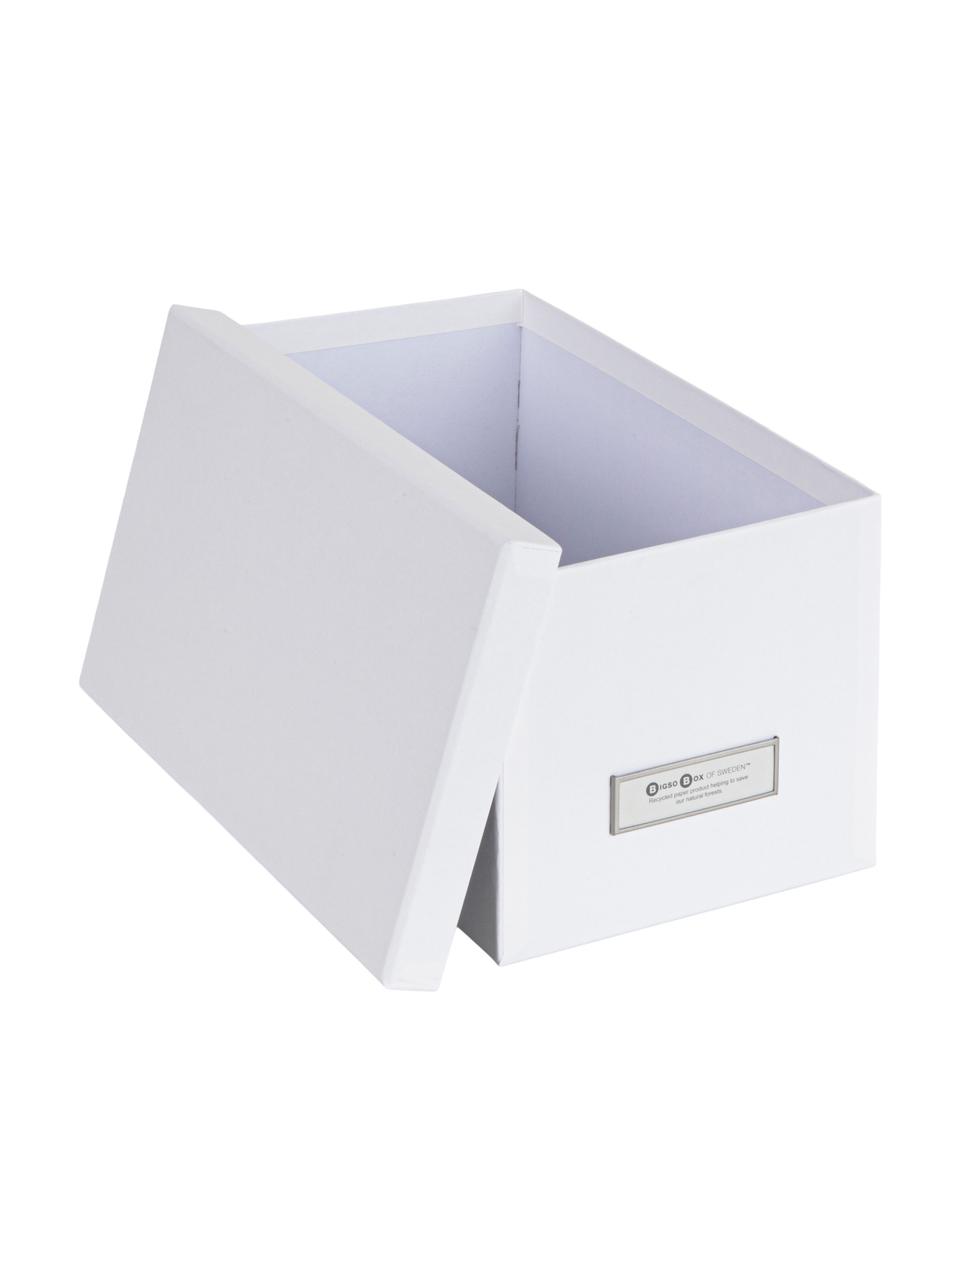 Aufbewahrungsbox Silvia, 2 Stück, Box: fester, laminierter Karto, Weiß, B 17 x H 15 cm